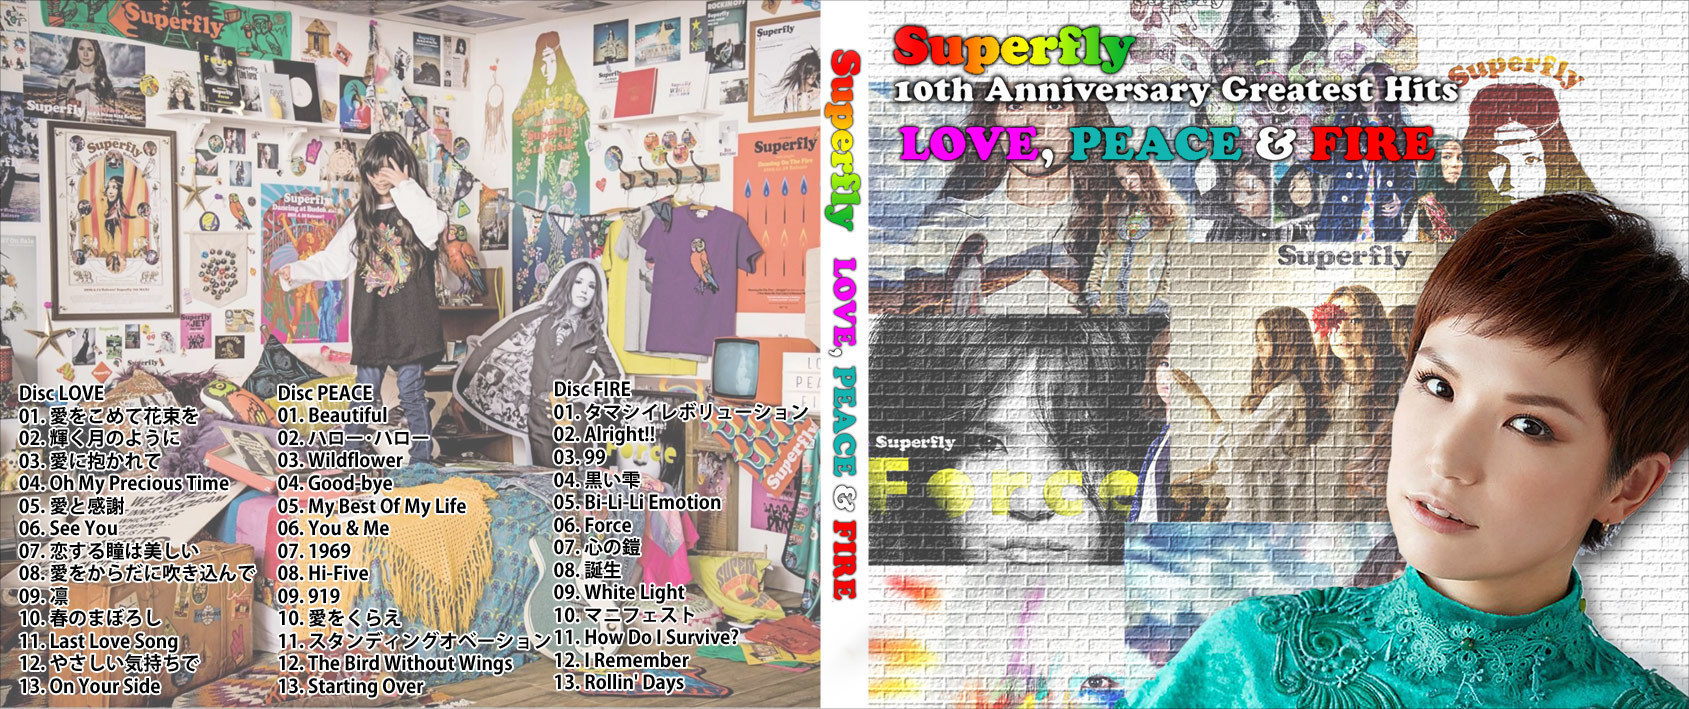 Superfly 10th Anniversary Greatest Hits Love Peace Fire Tanapapa 自作ラベル保管庫